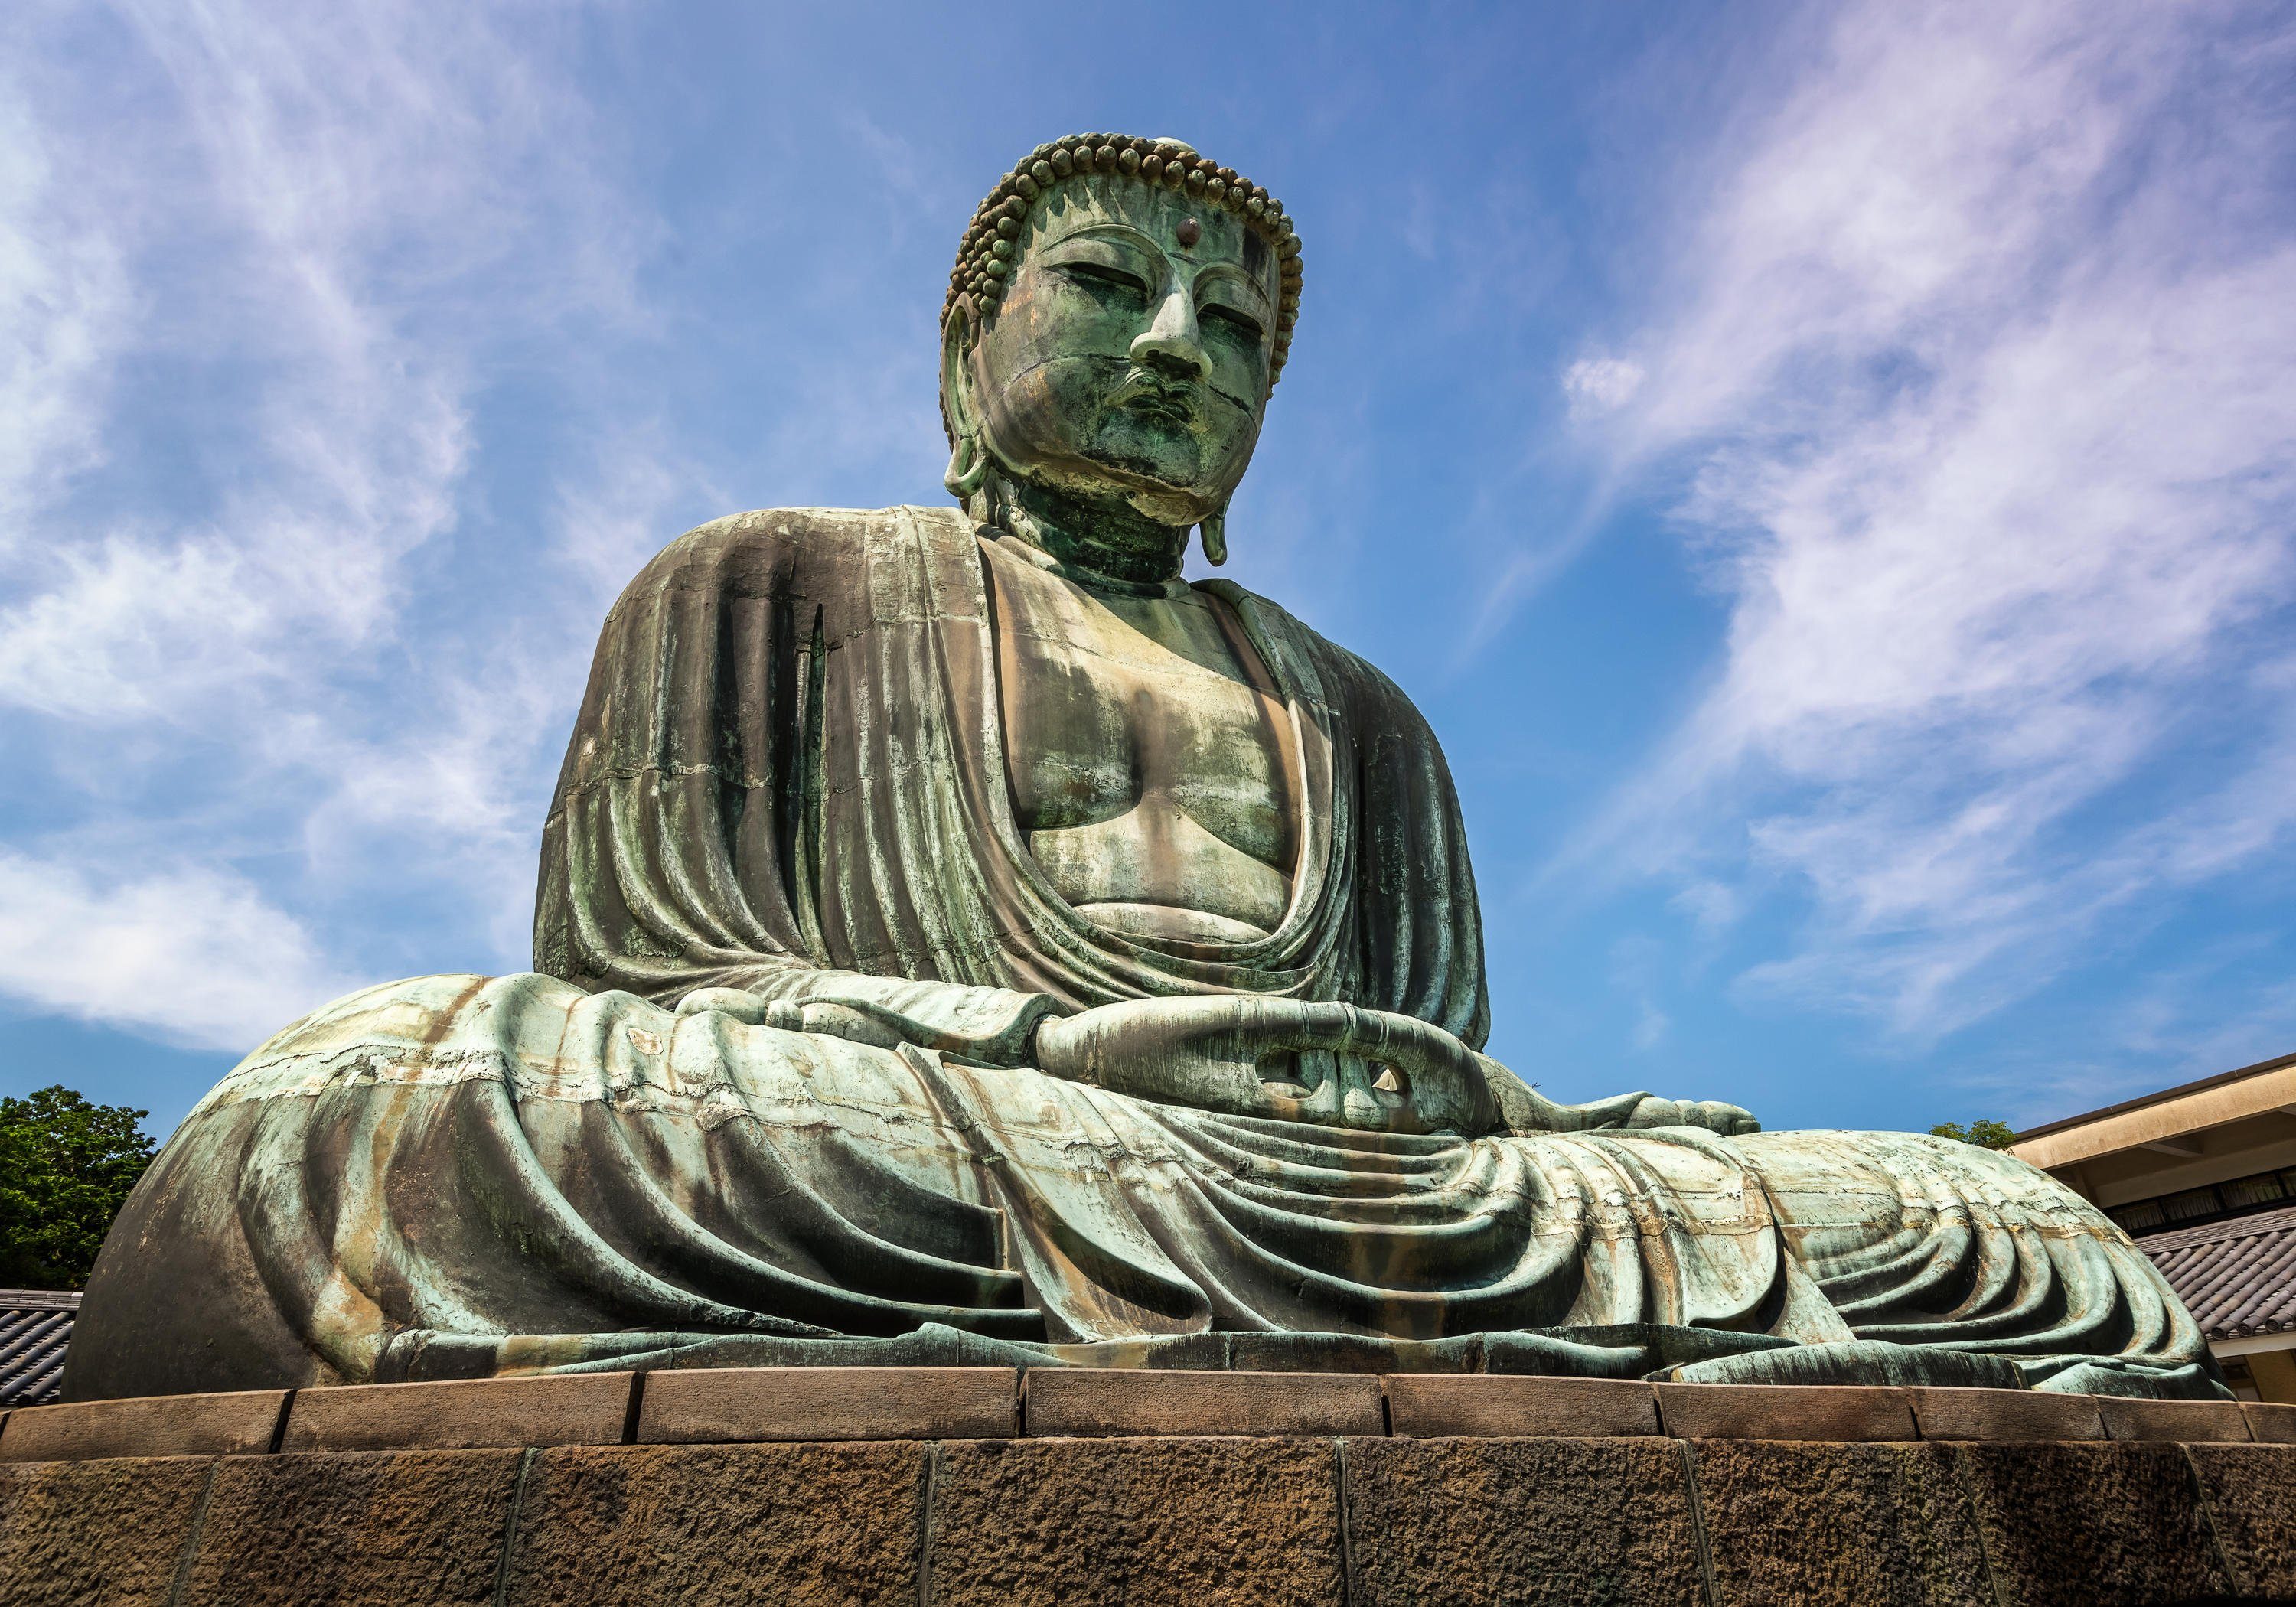 wandmotiv24 Fototapete Der Große Buddha von Kamakura, glatt, Wandtapete, Motivtapete, matt, Vliestapete